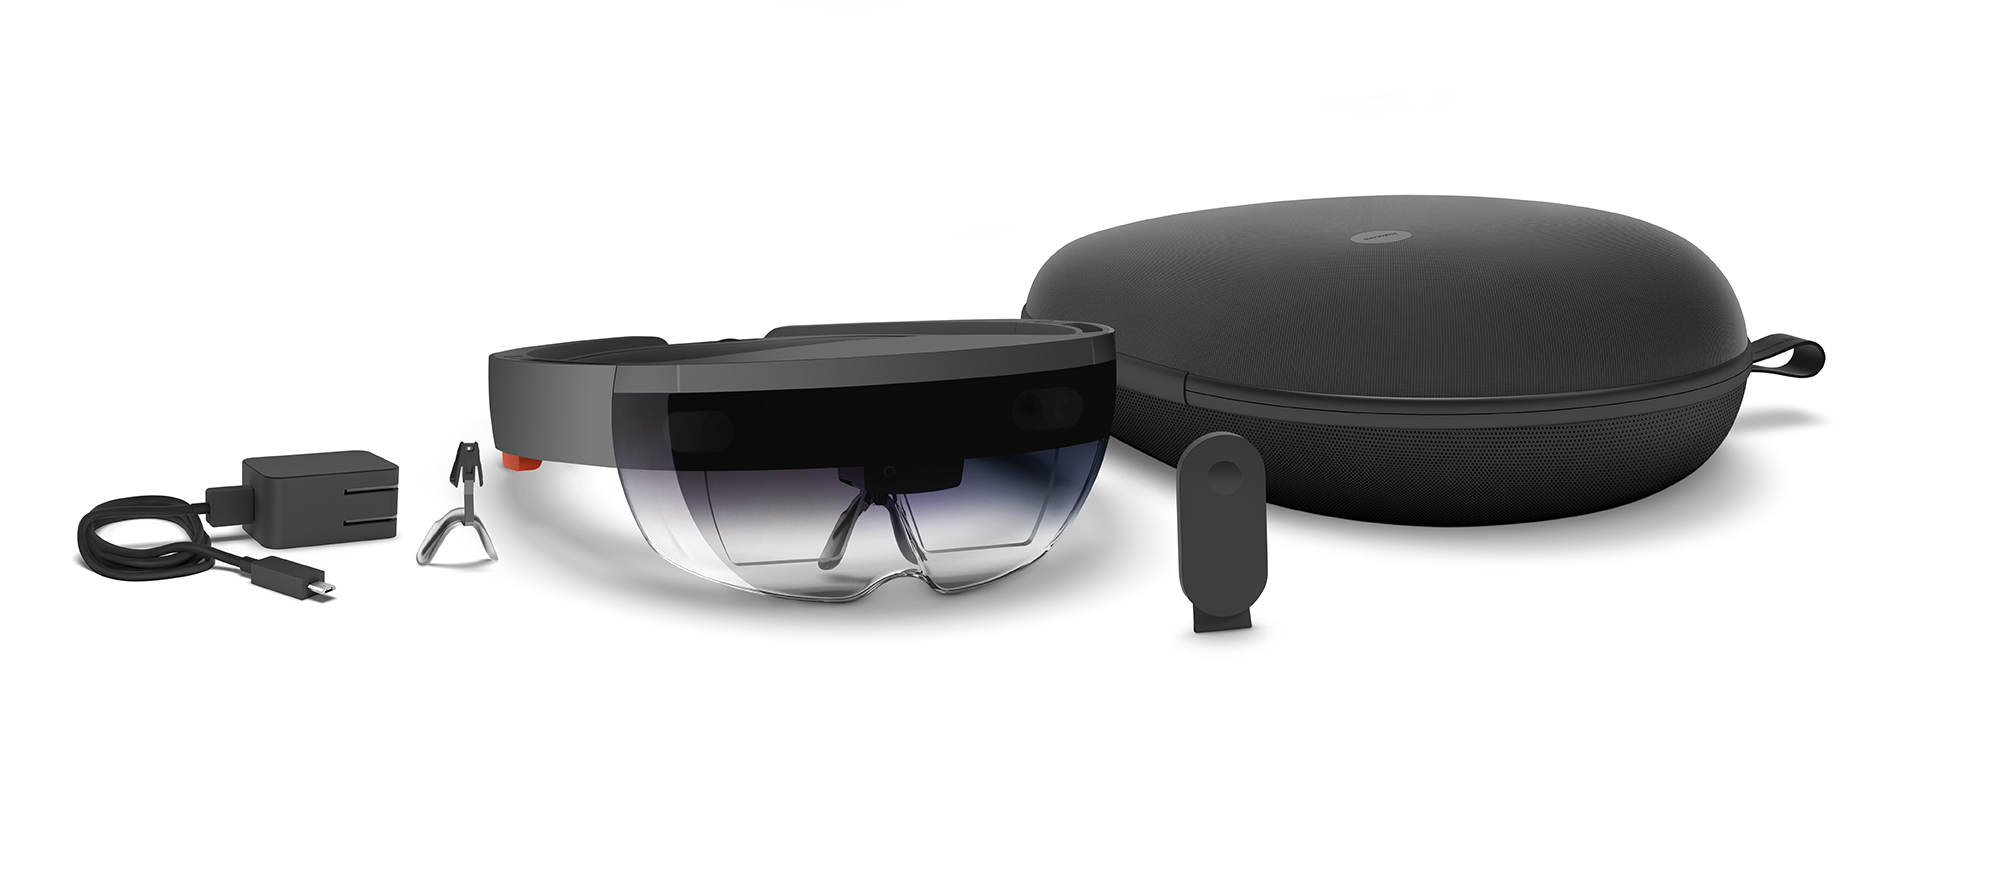 Предзаказ Microsoft HoloLens для разработчиков доступен за $3000